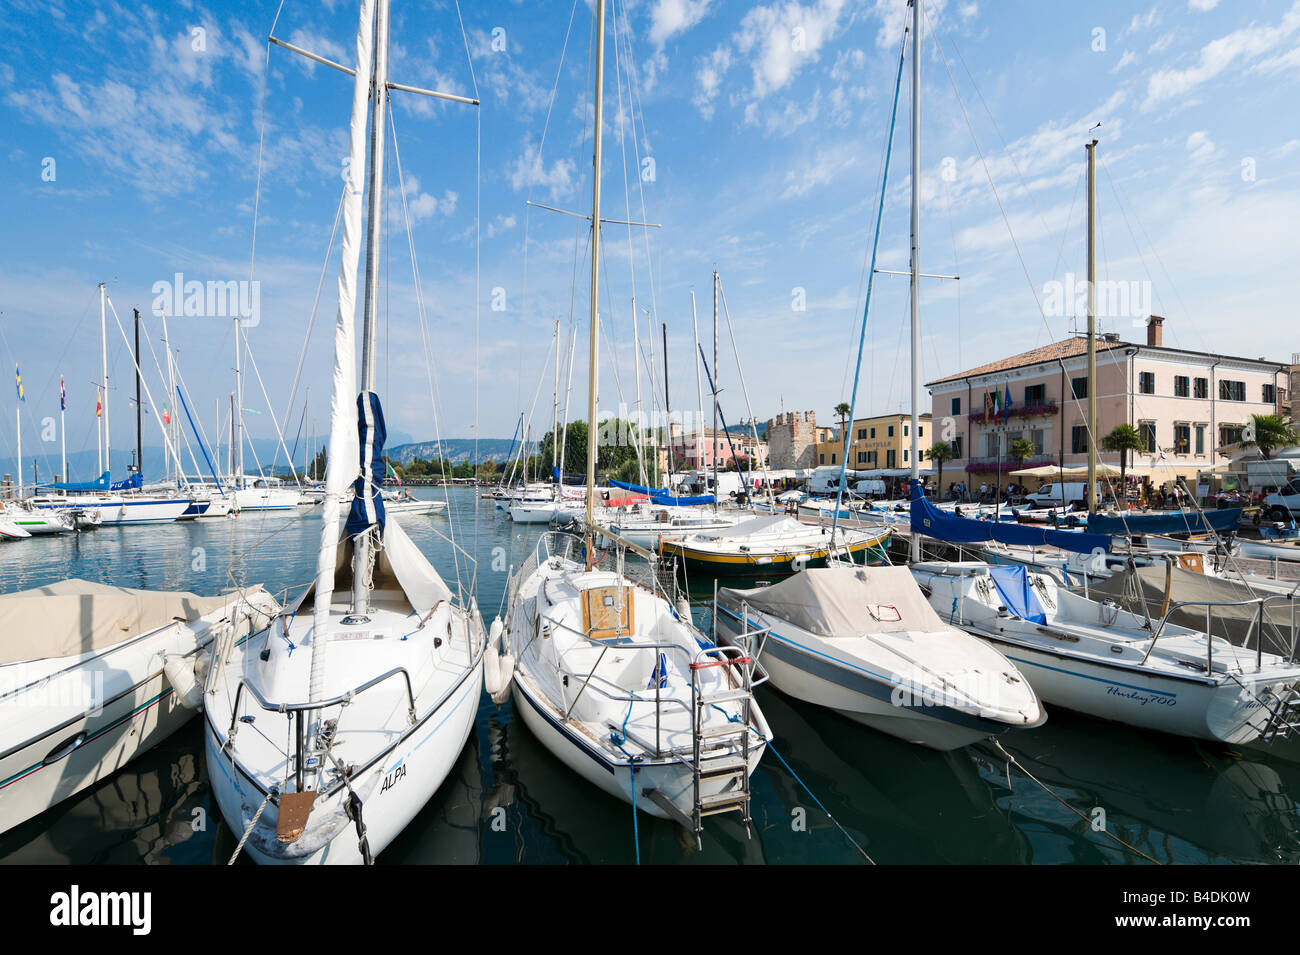 Yachts in the harbour, Bardolino, Lake Garda, Italy Stock Photo